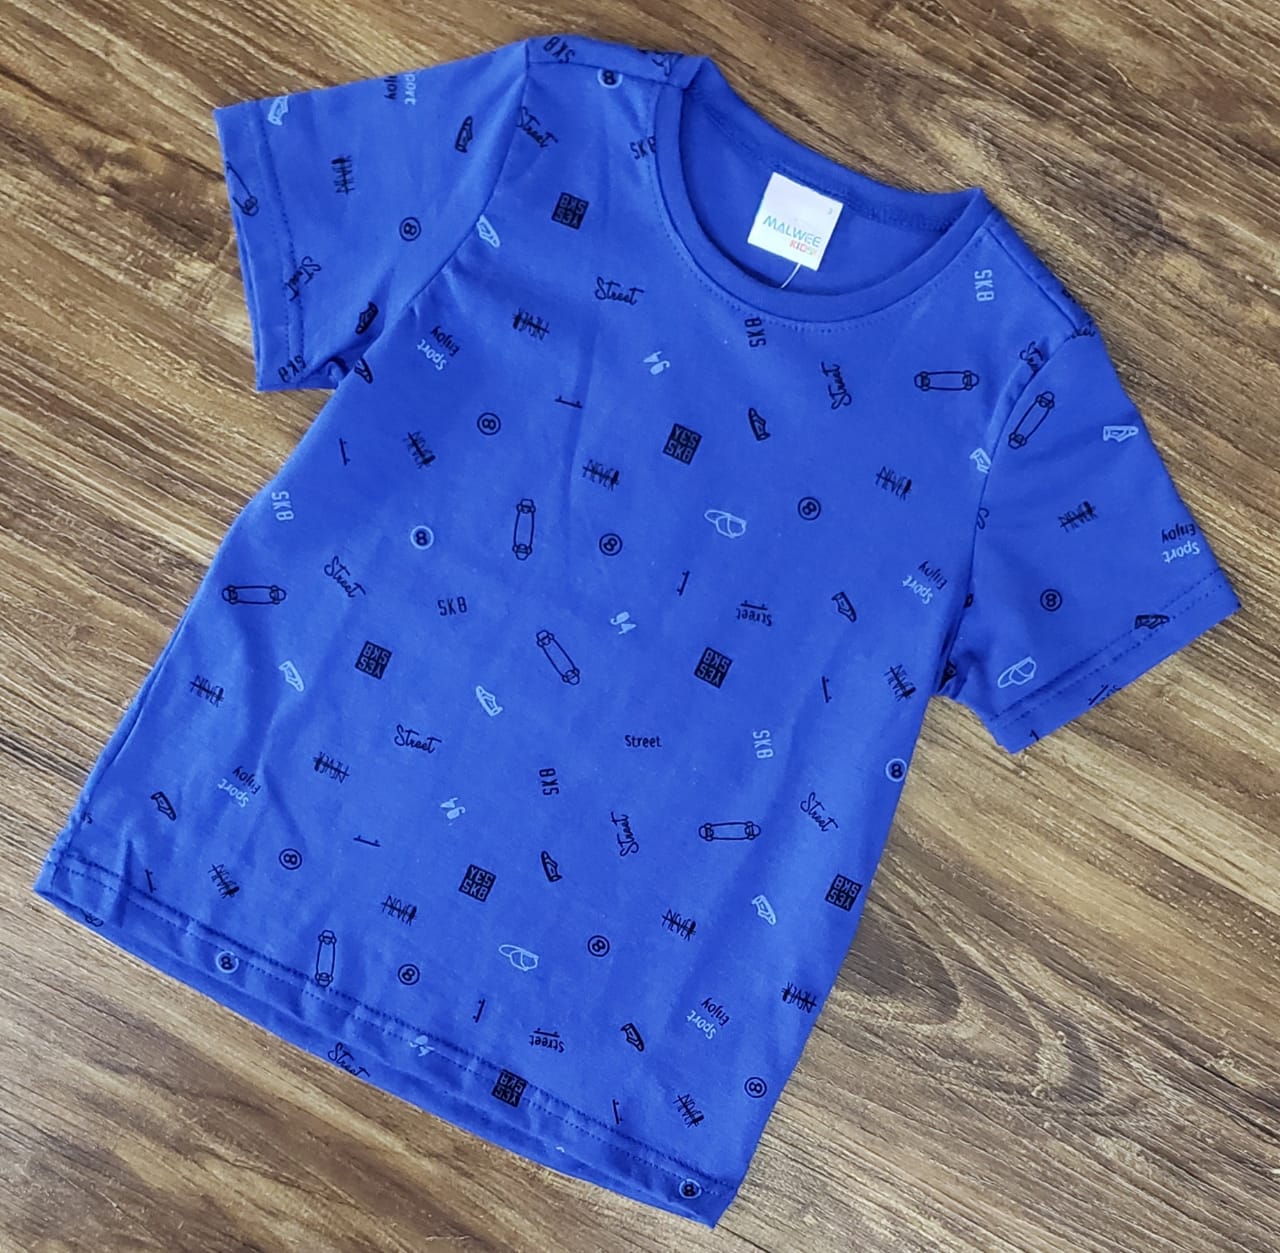 Camiseta Street Azul